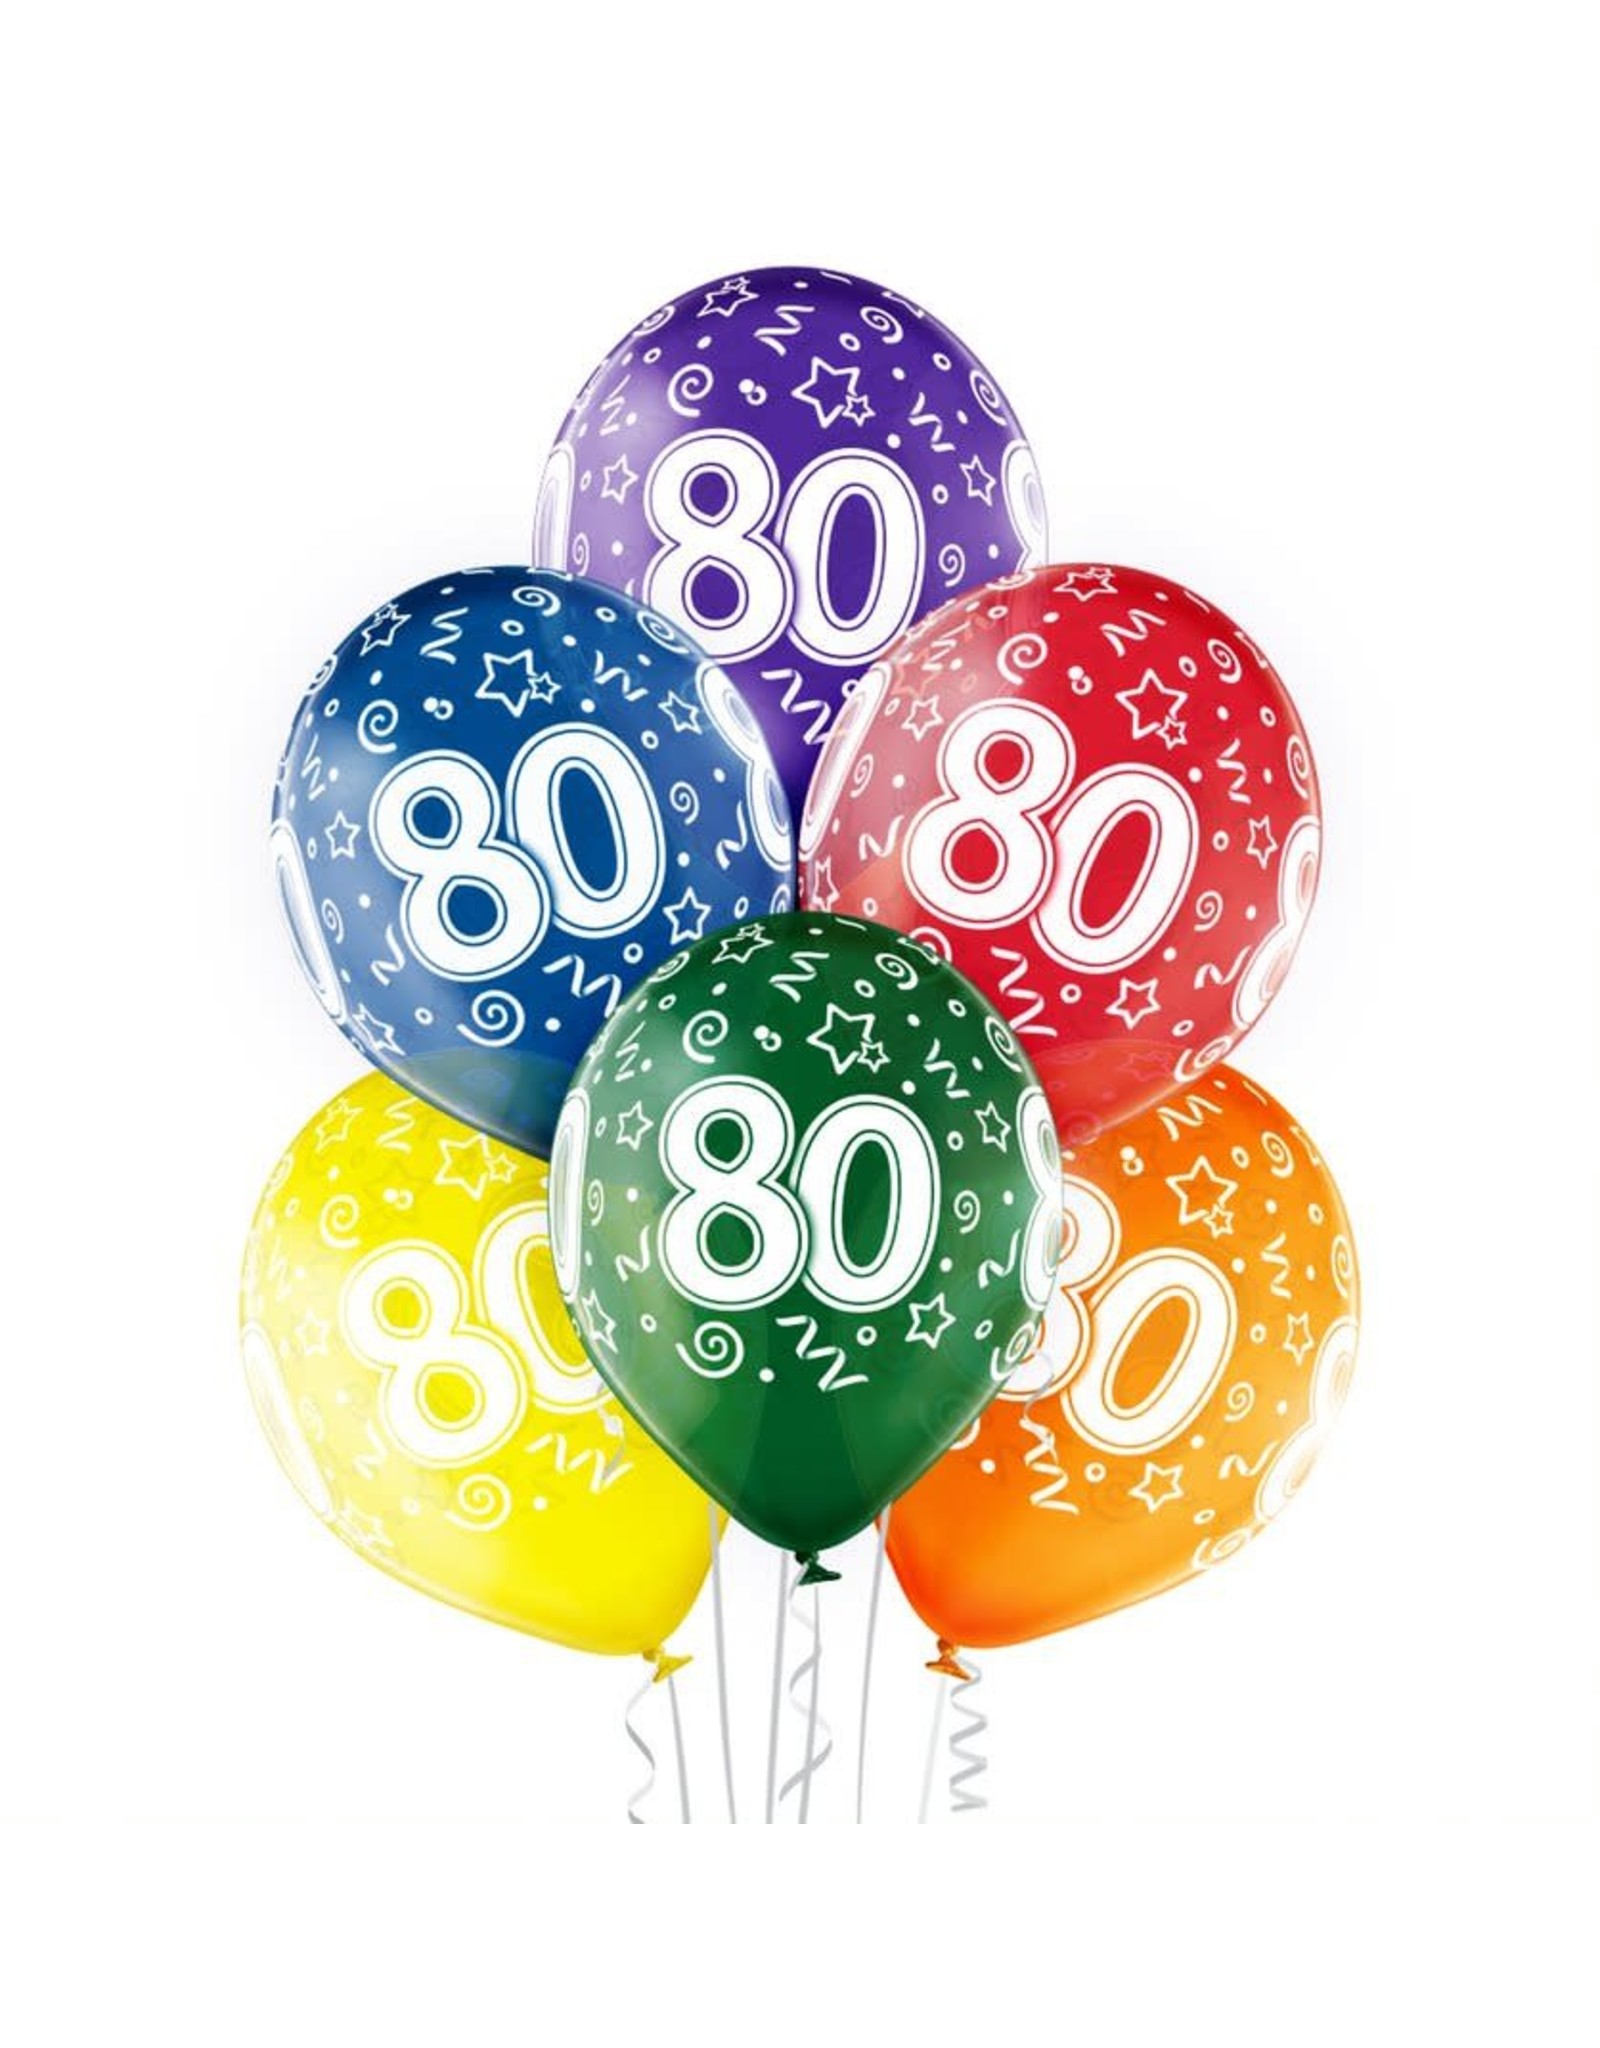 Belbal latex ballonnen 80th birthday 6 stuks